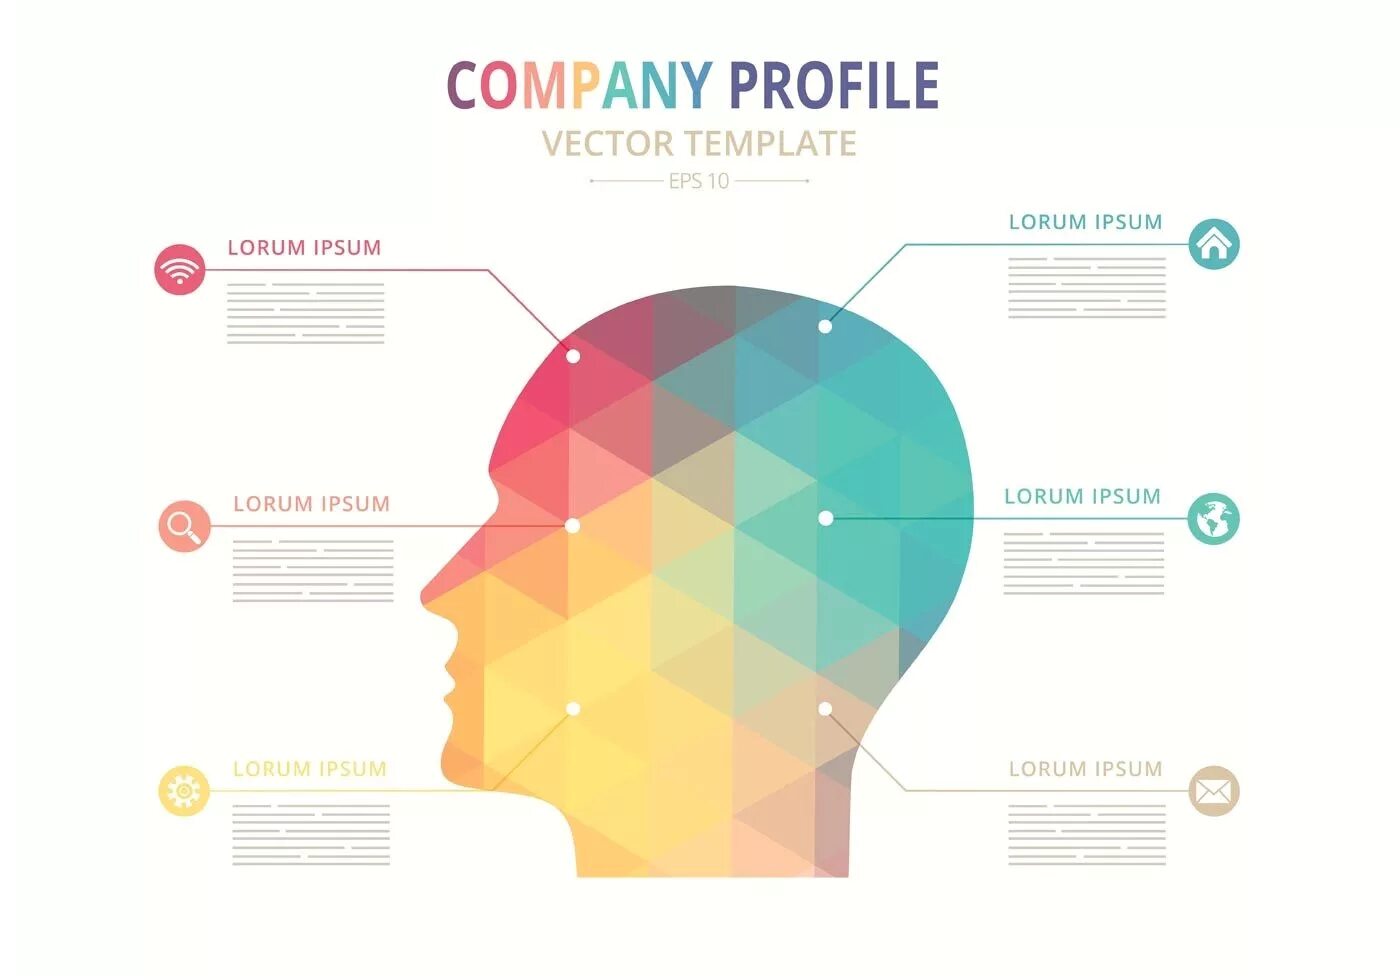 Profile компания. Профайл компании пример. Company profile Template. Профиль компании образец. Company's profile